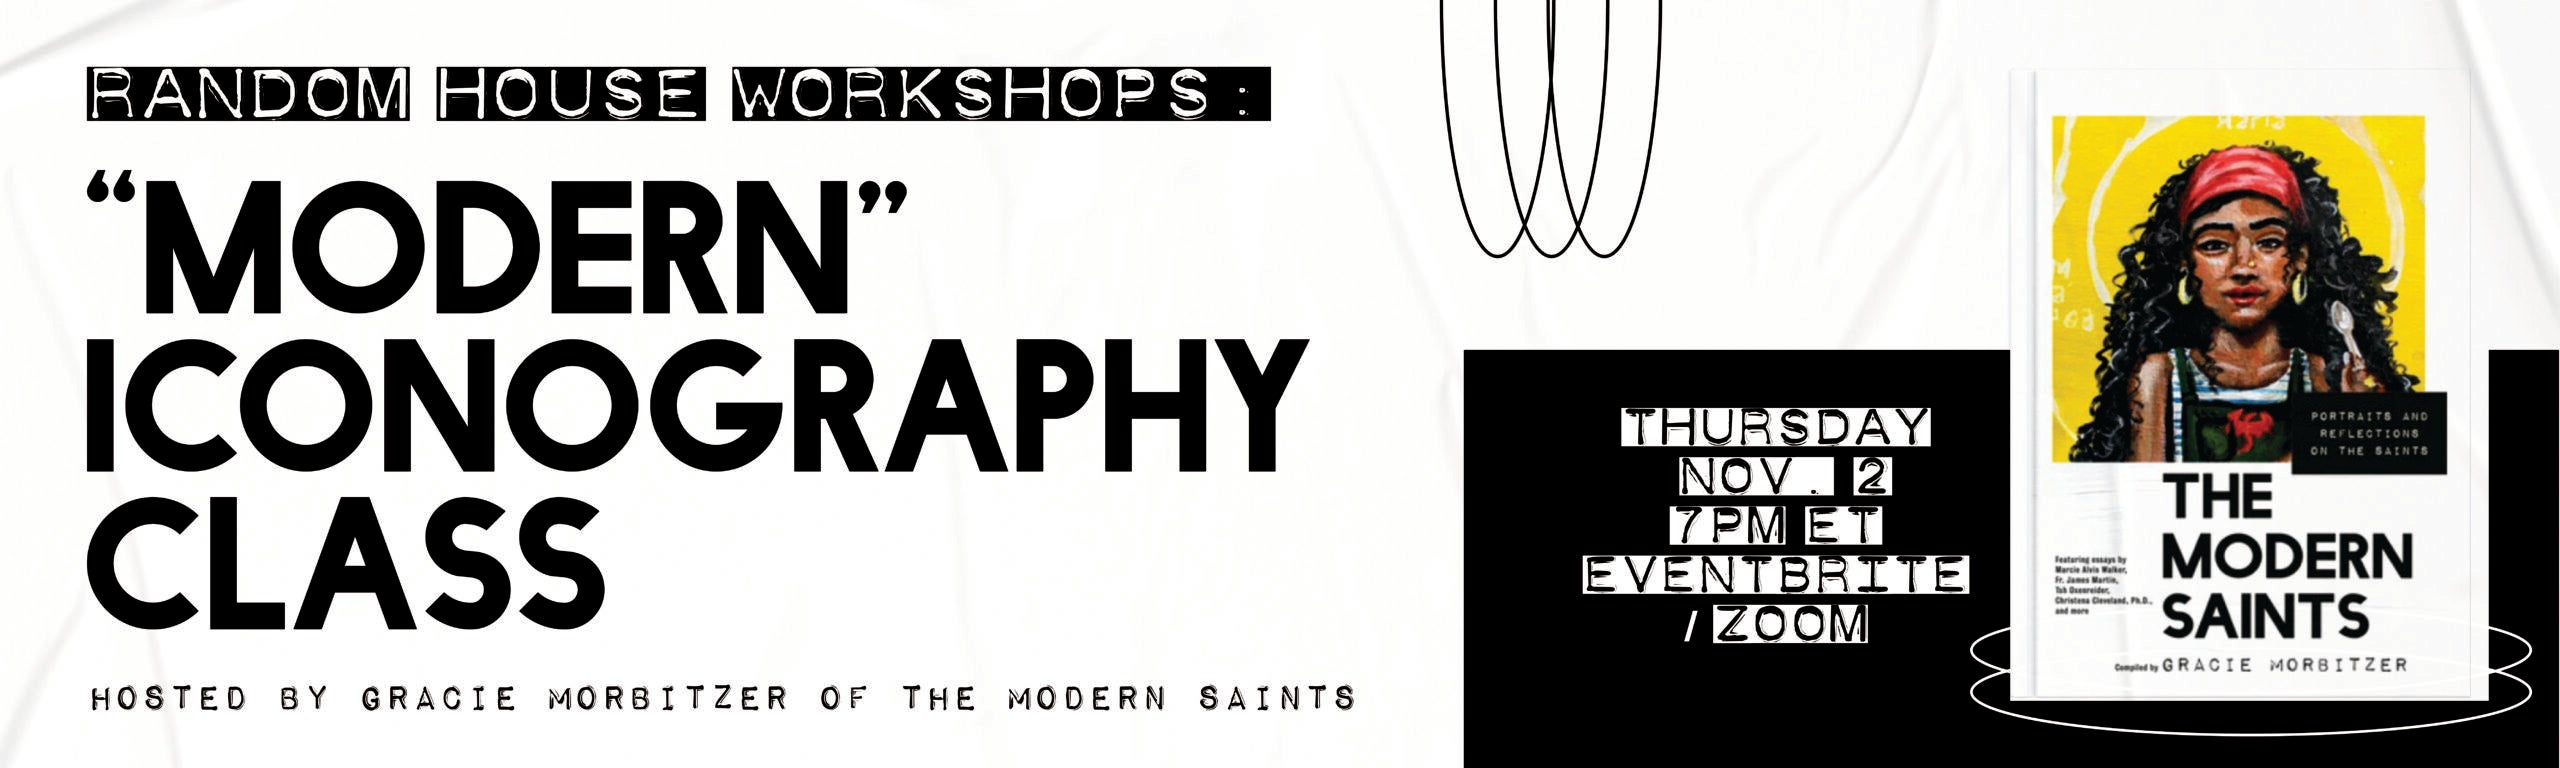 Random House Workshops: Modern Iconography Class